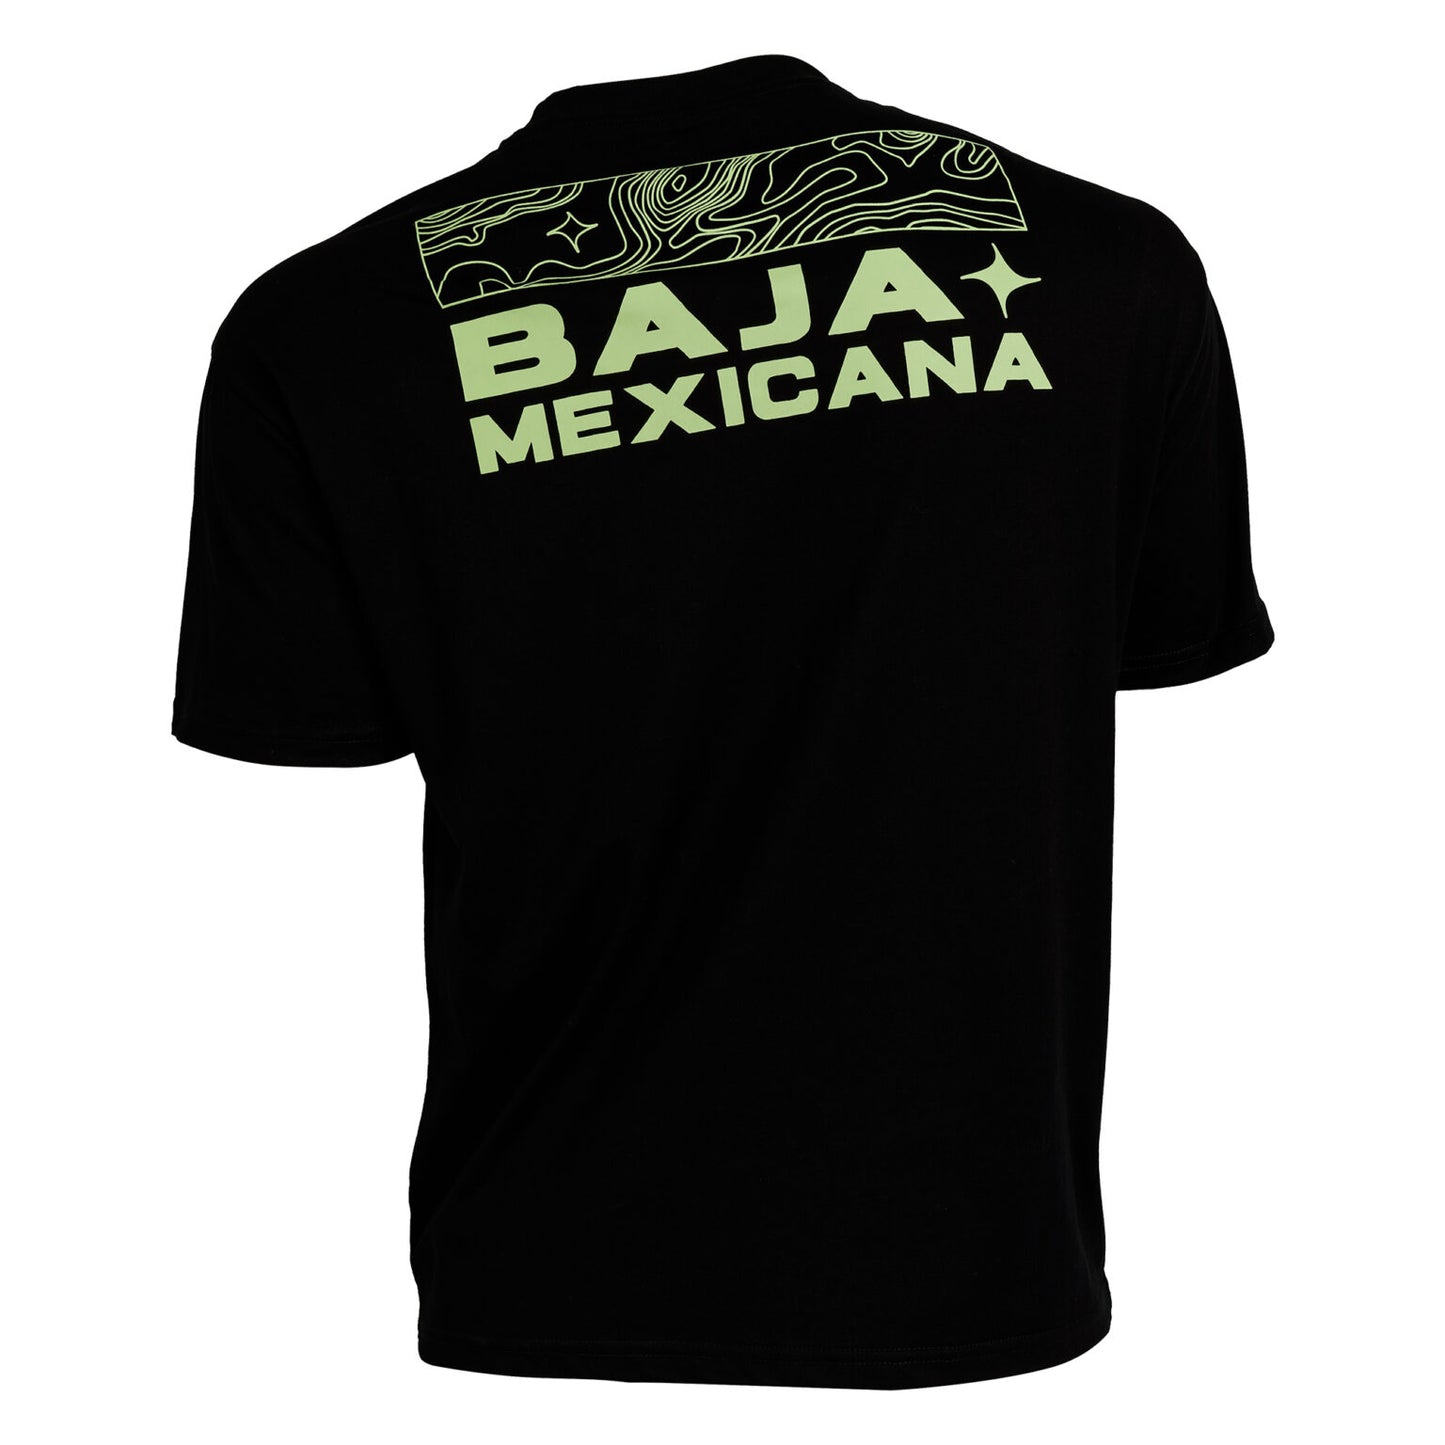 Camiseta Maja Negro Baja - Manga Corta